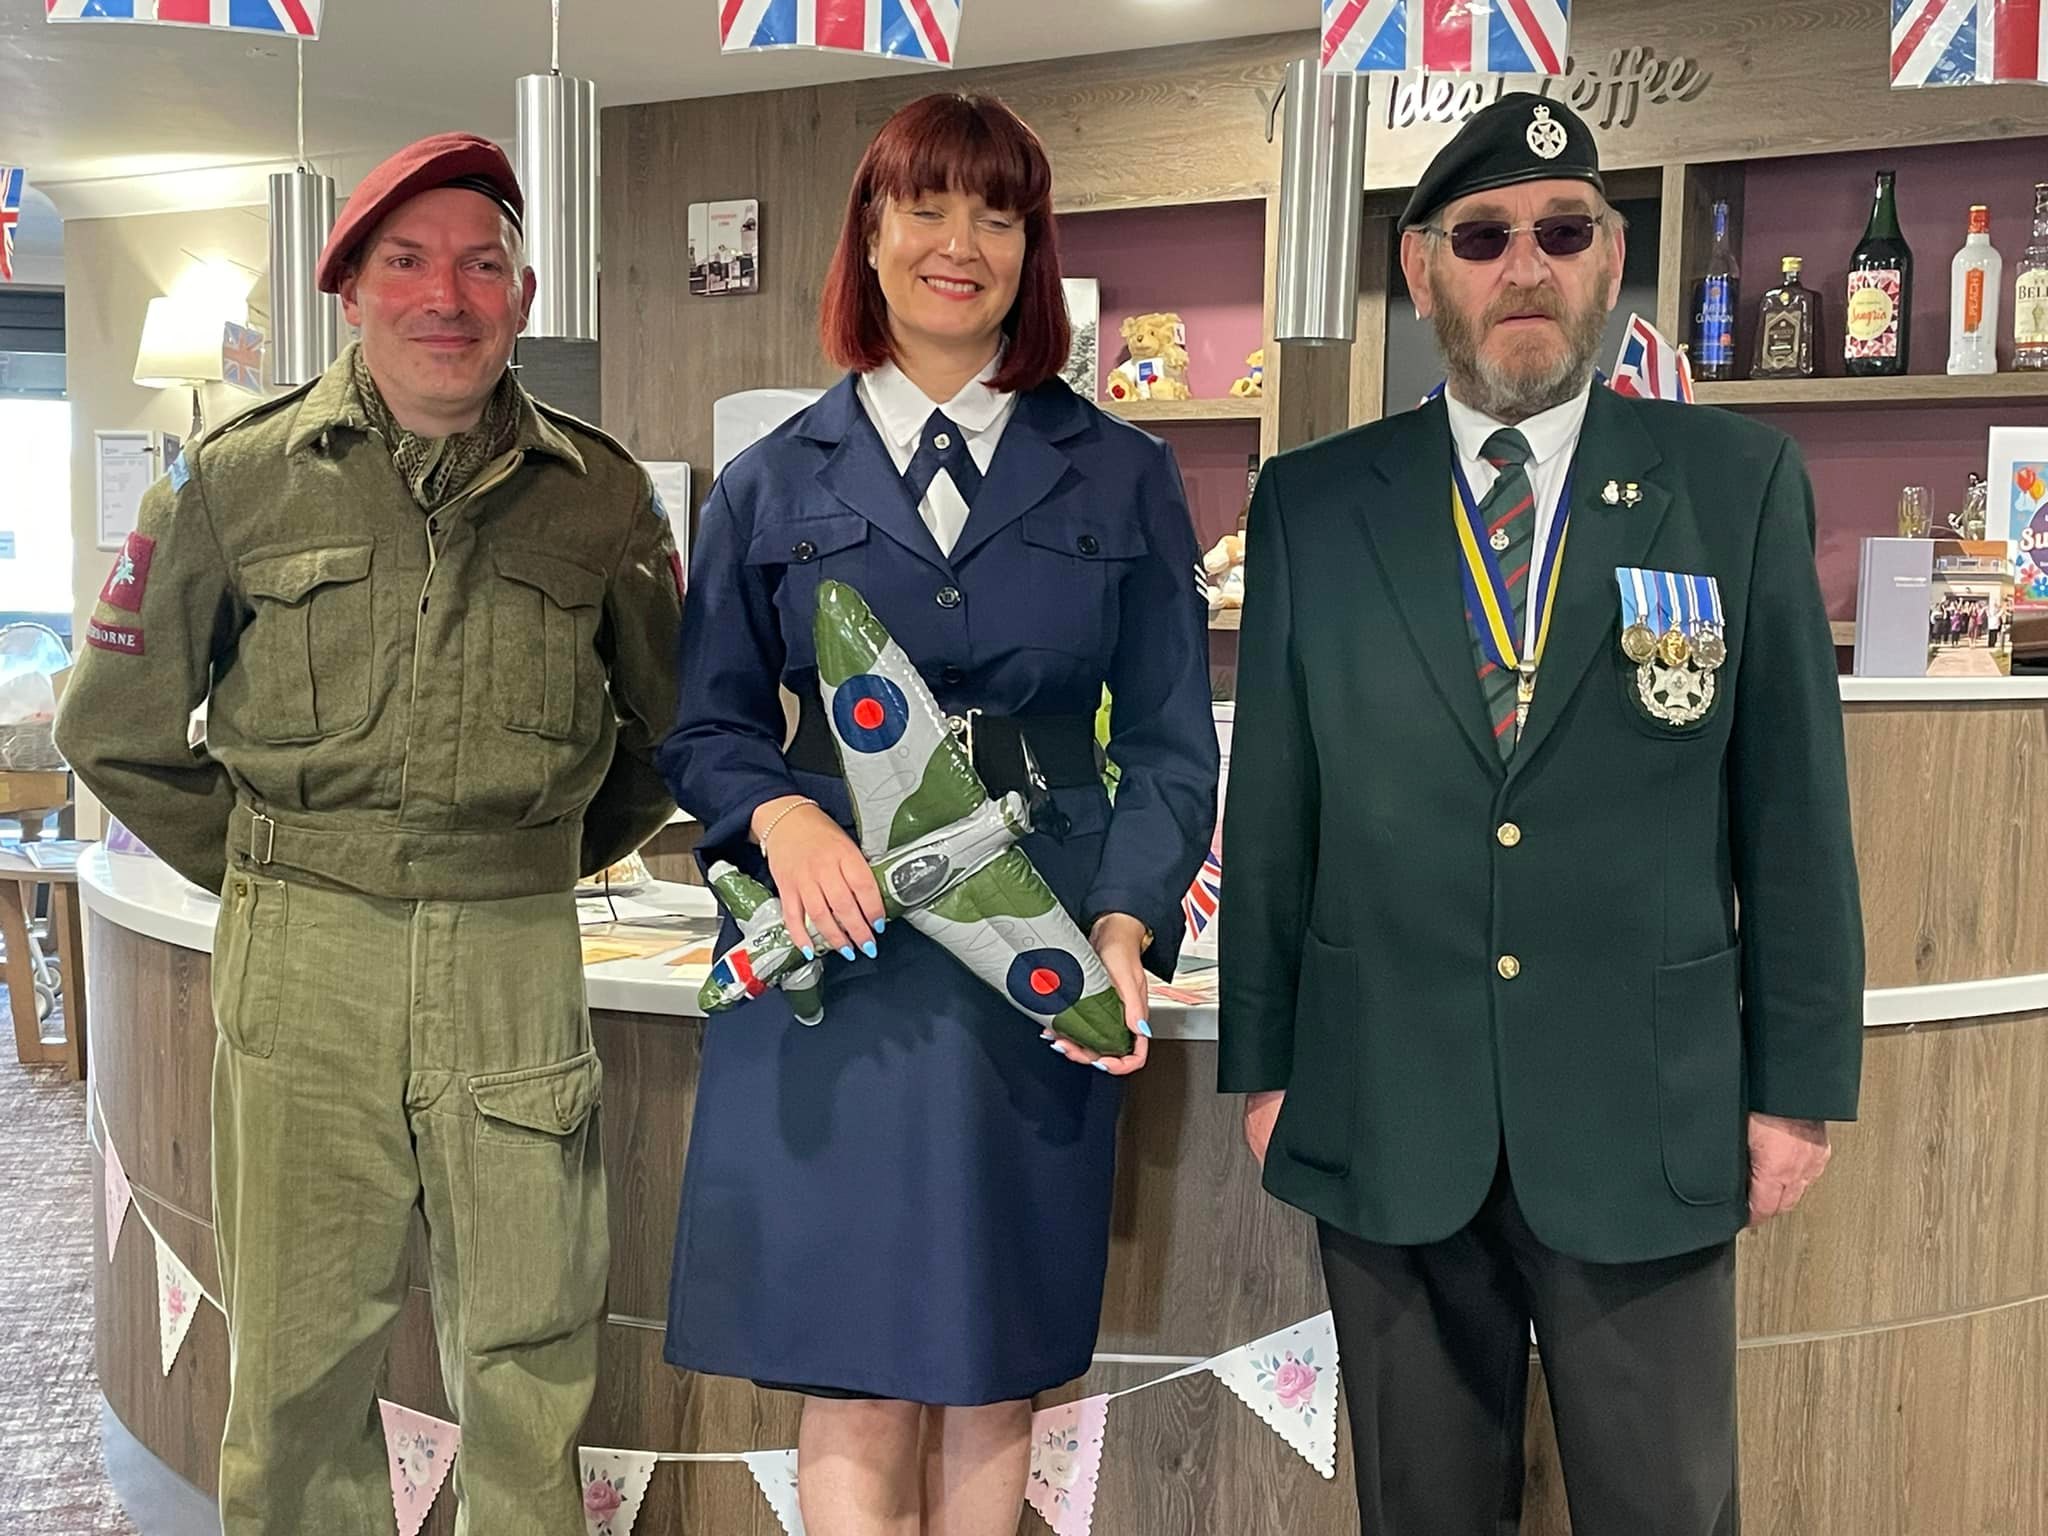 Littleton Lodge celebrates Armed Forces Day